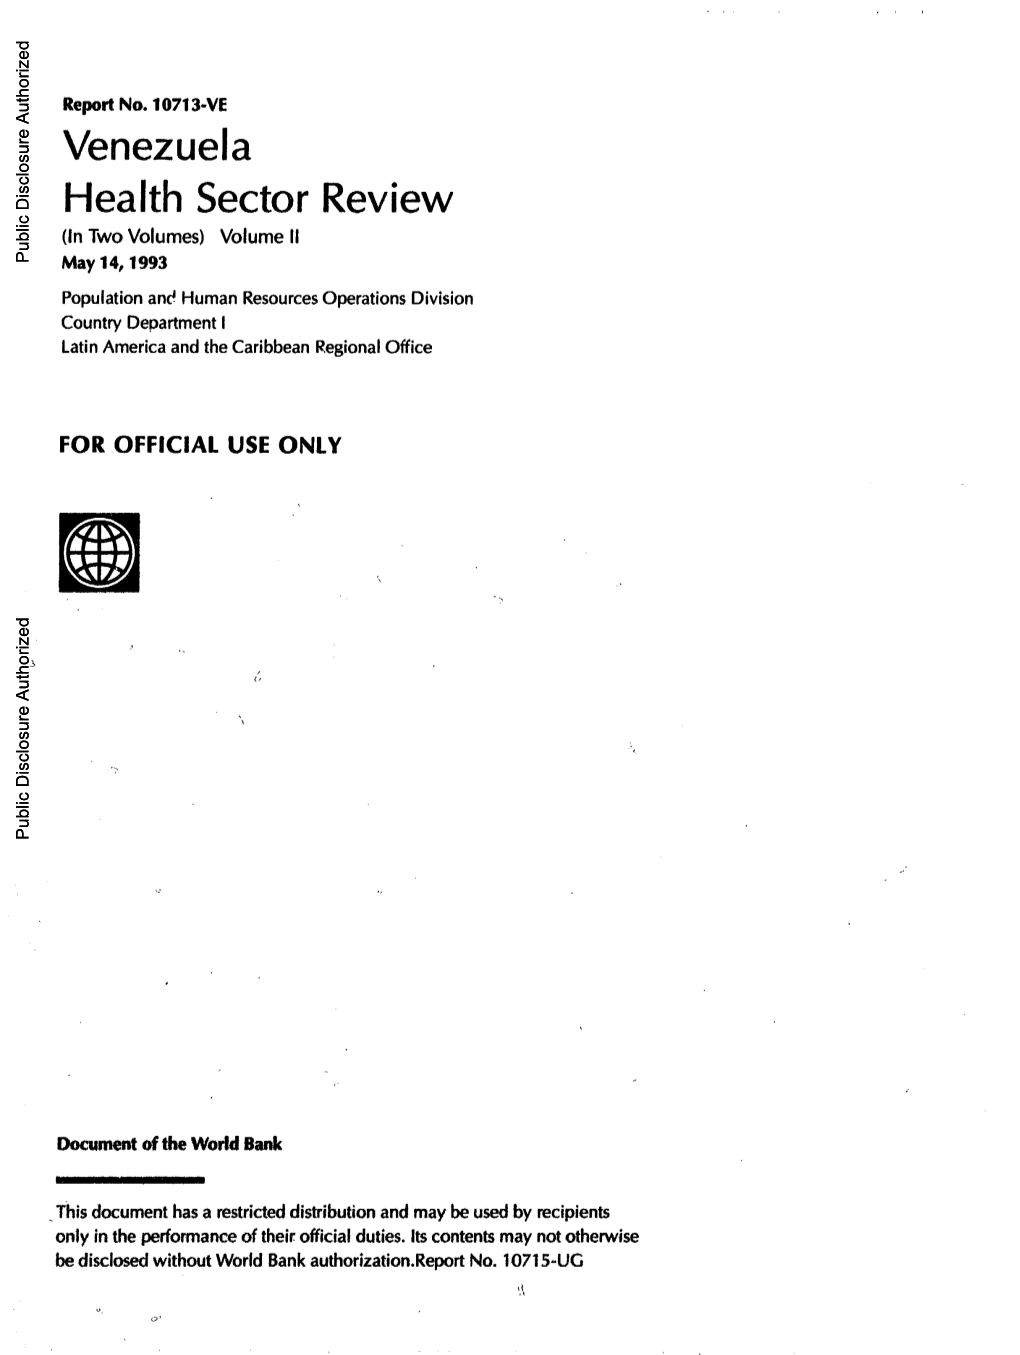 Venezuela Health Sector Review